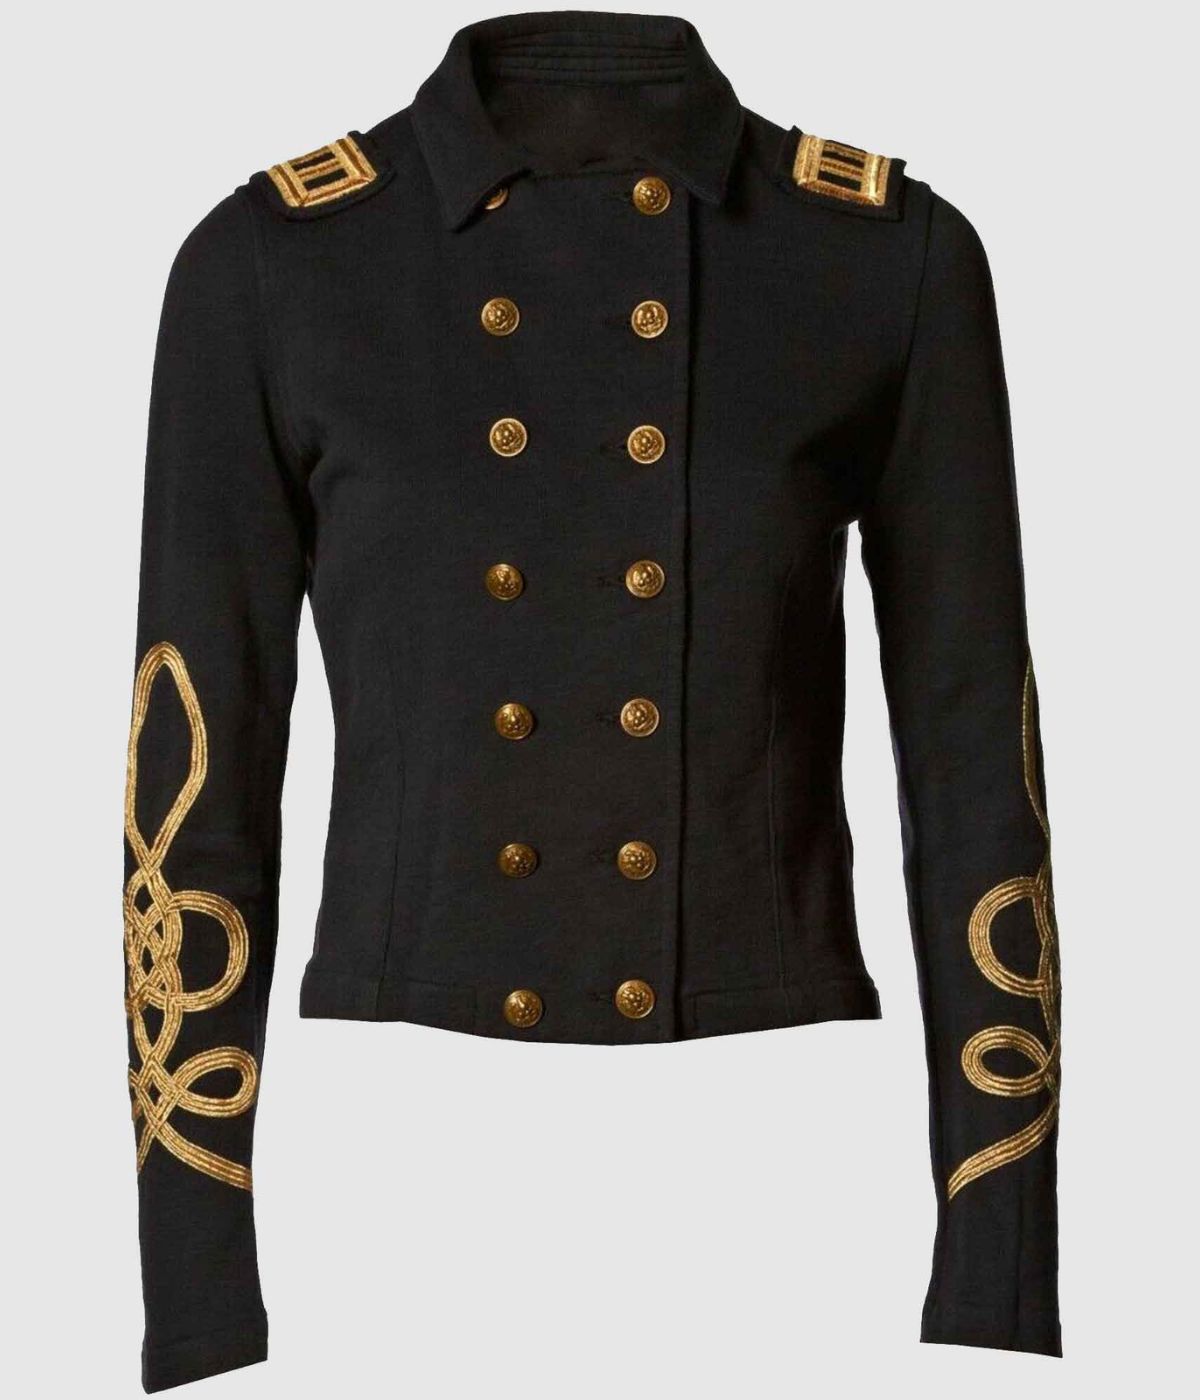 21st Century Black Ladies Wool Braid Jacket Military Style